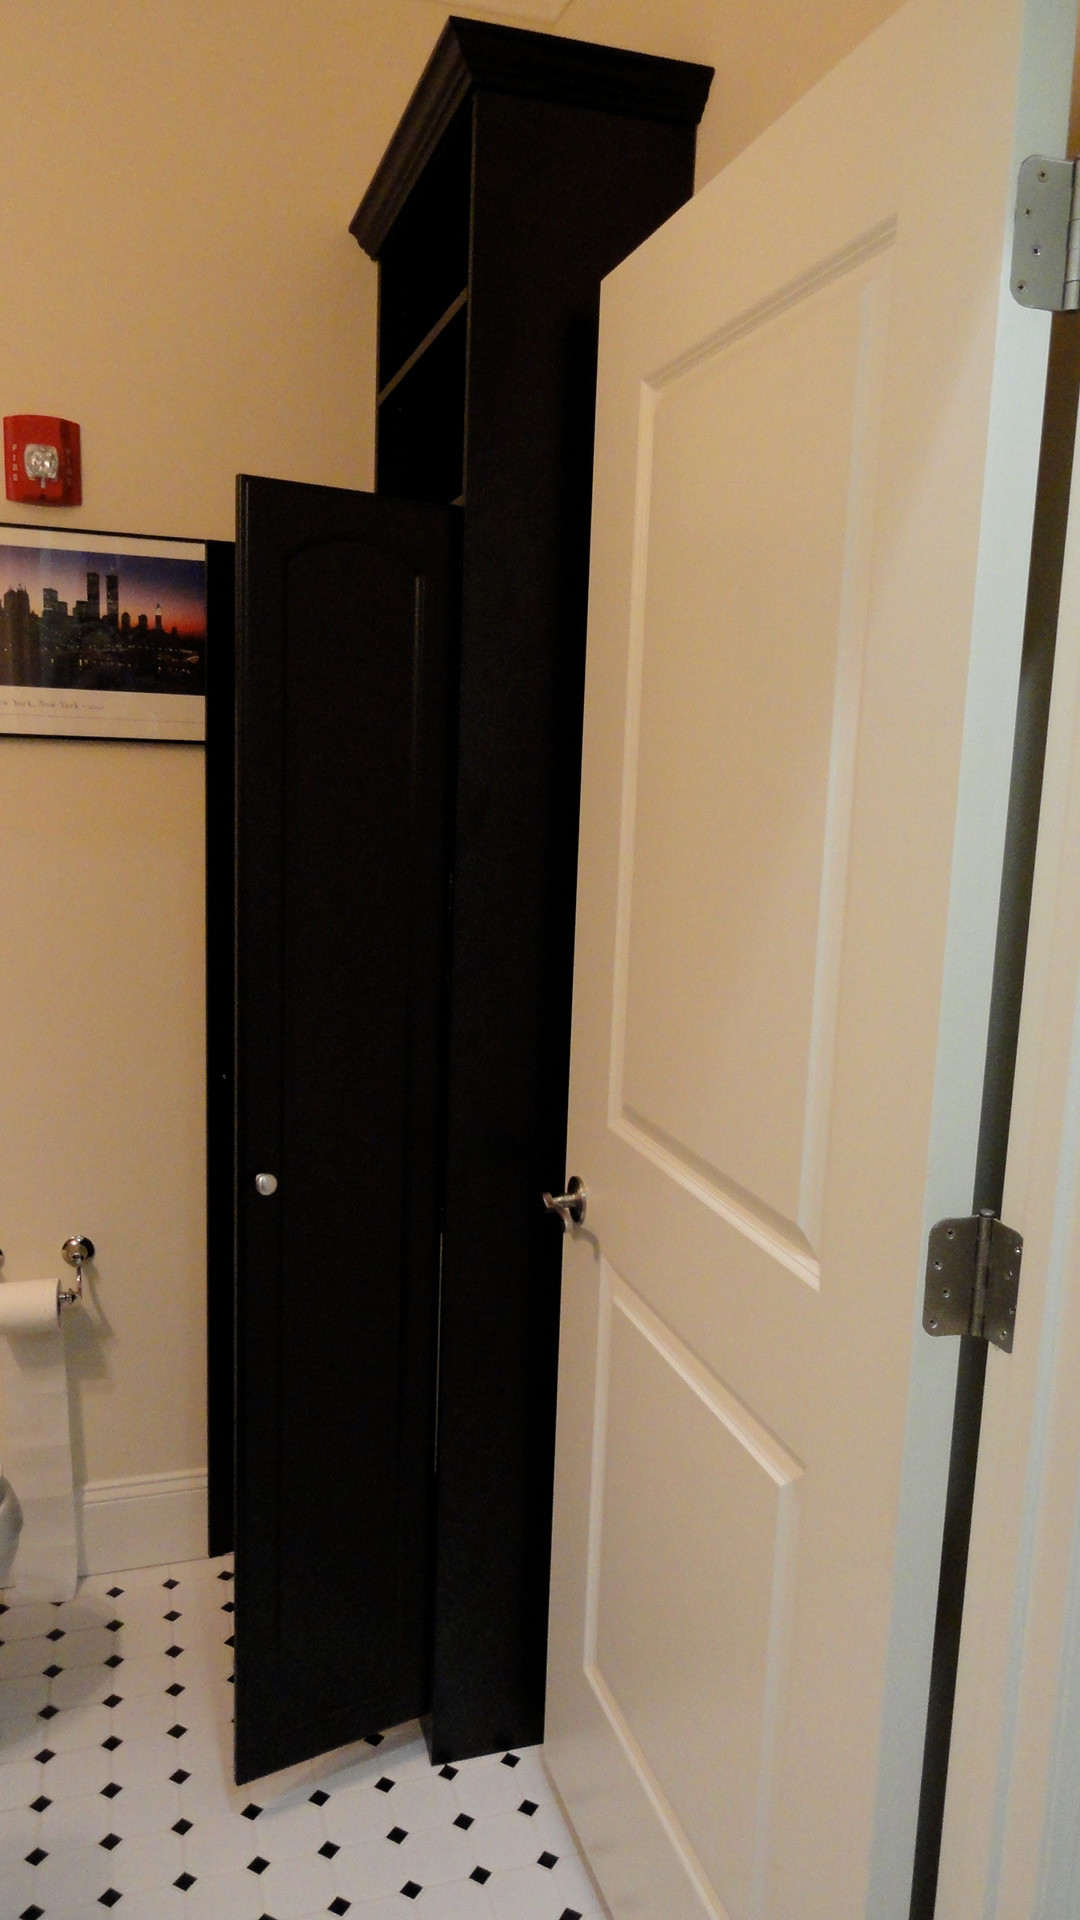 Linen Closets/Bathroom Cabinets